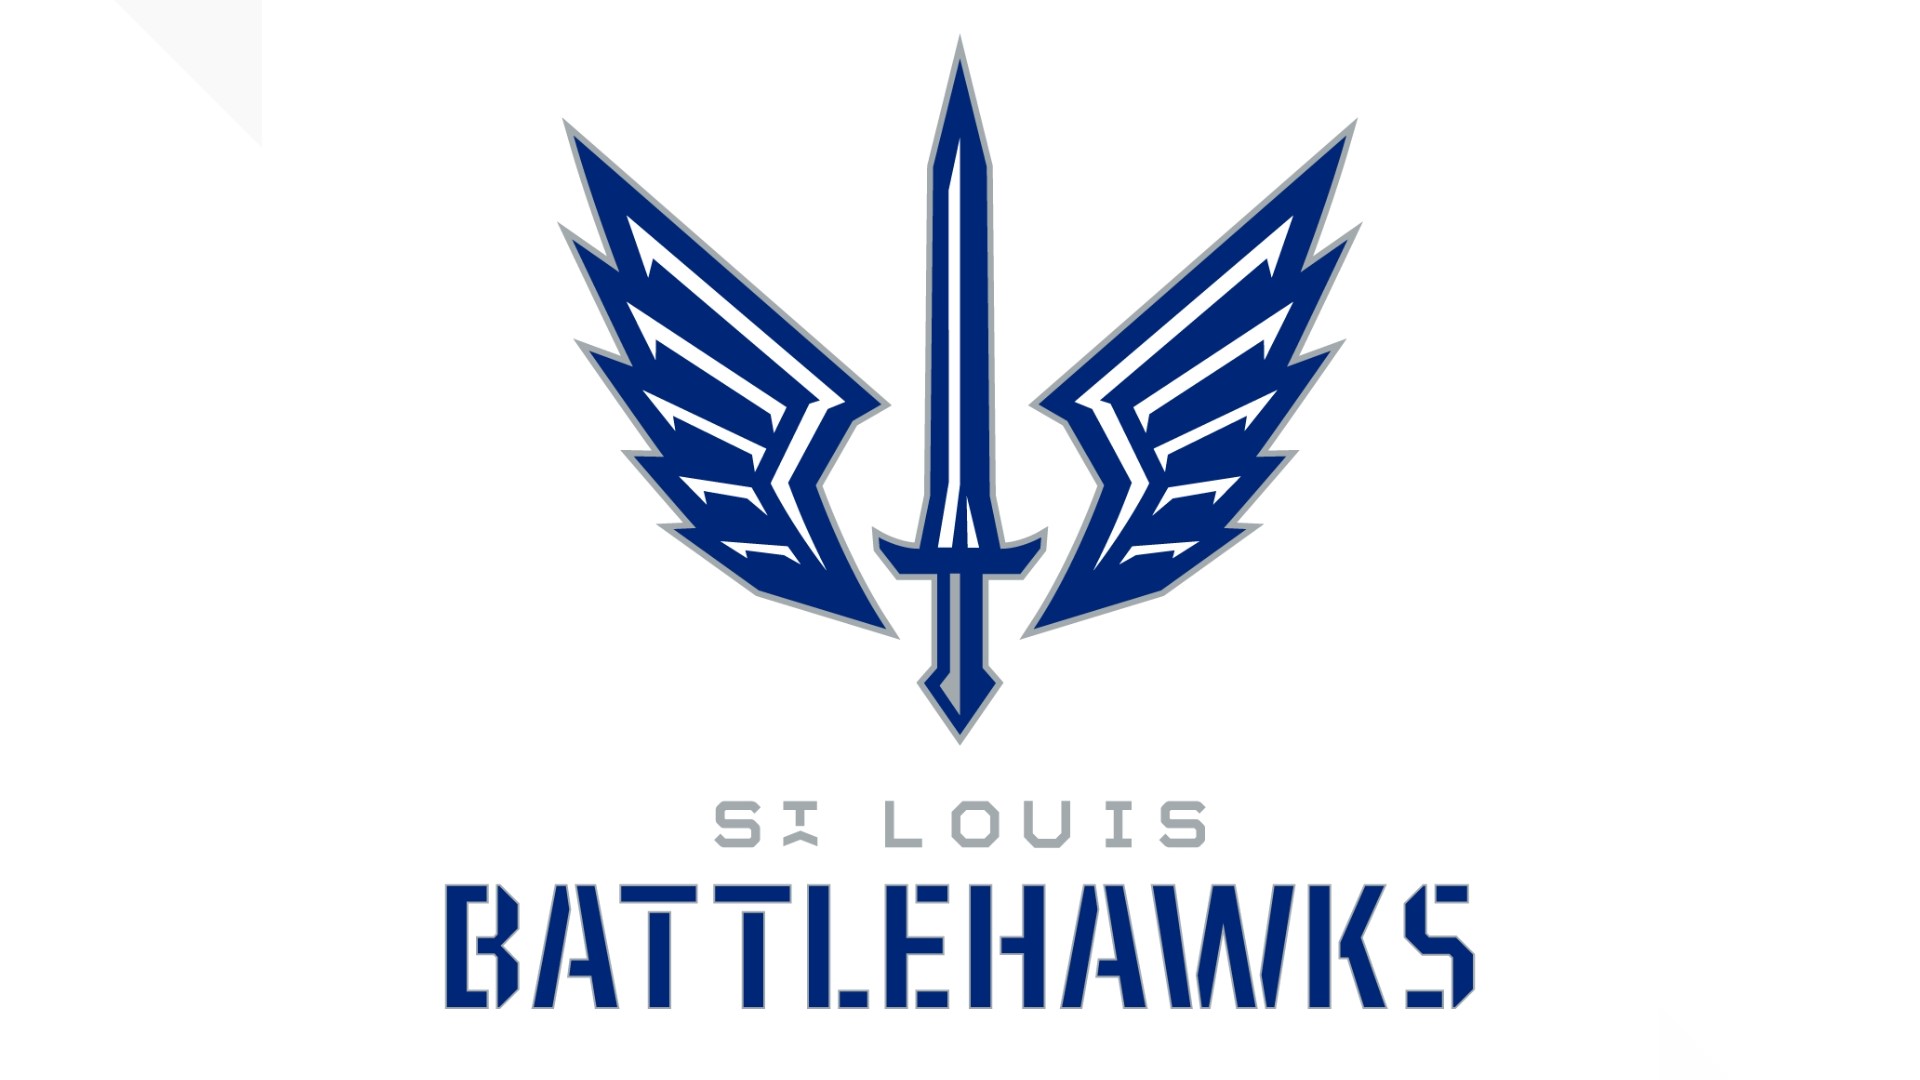 St. Louis Battlehawks season tickets available now